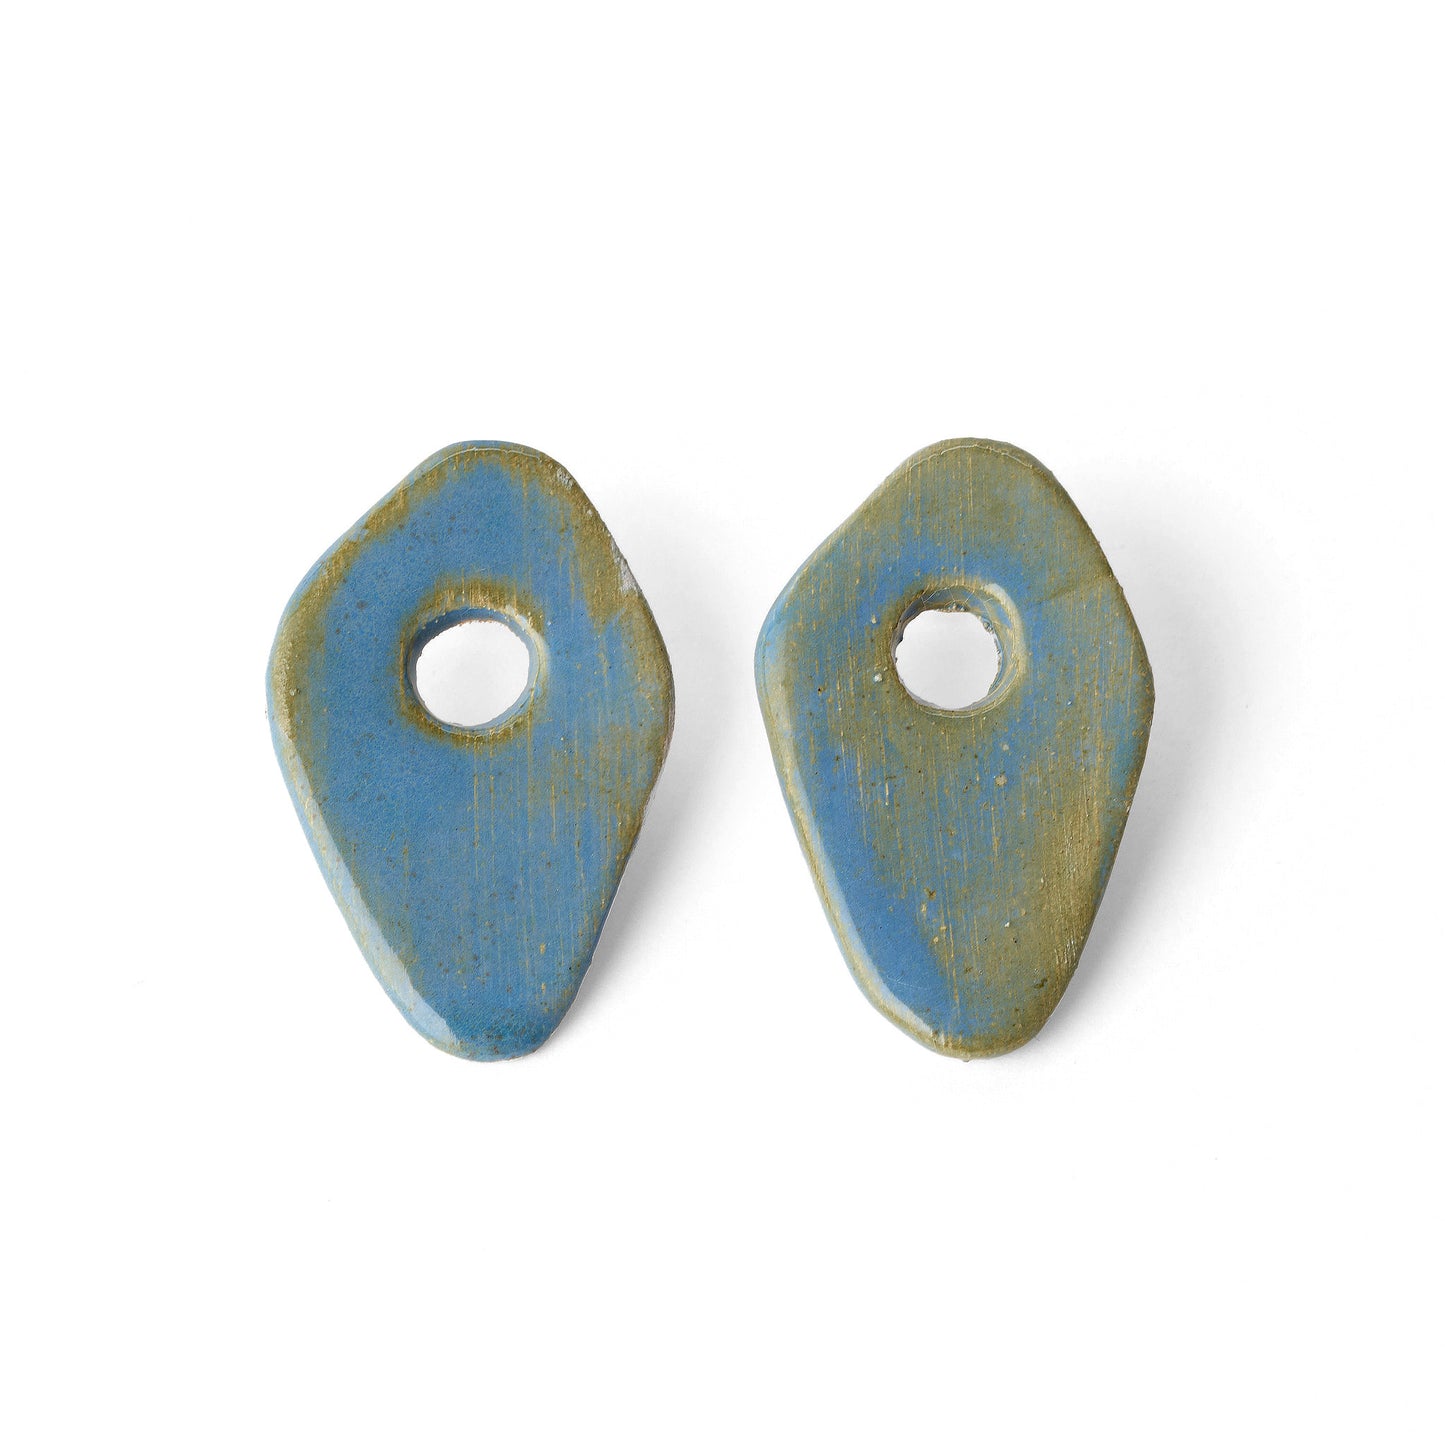 AREIA Earrings large blue/green